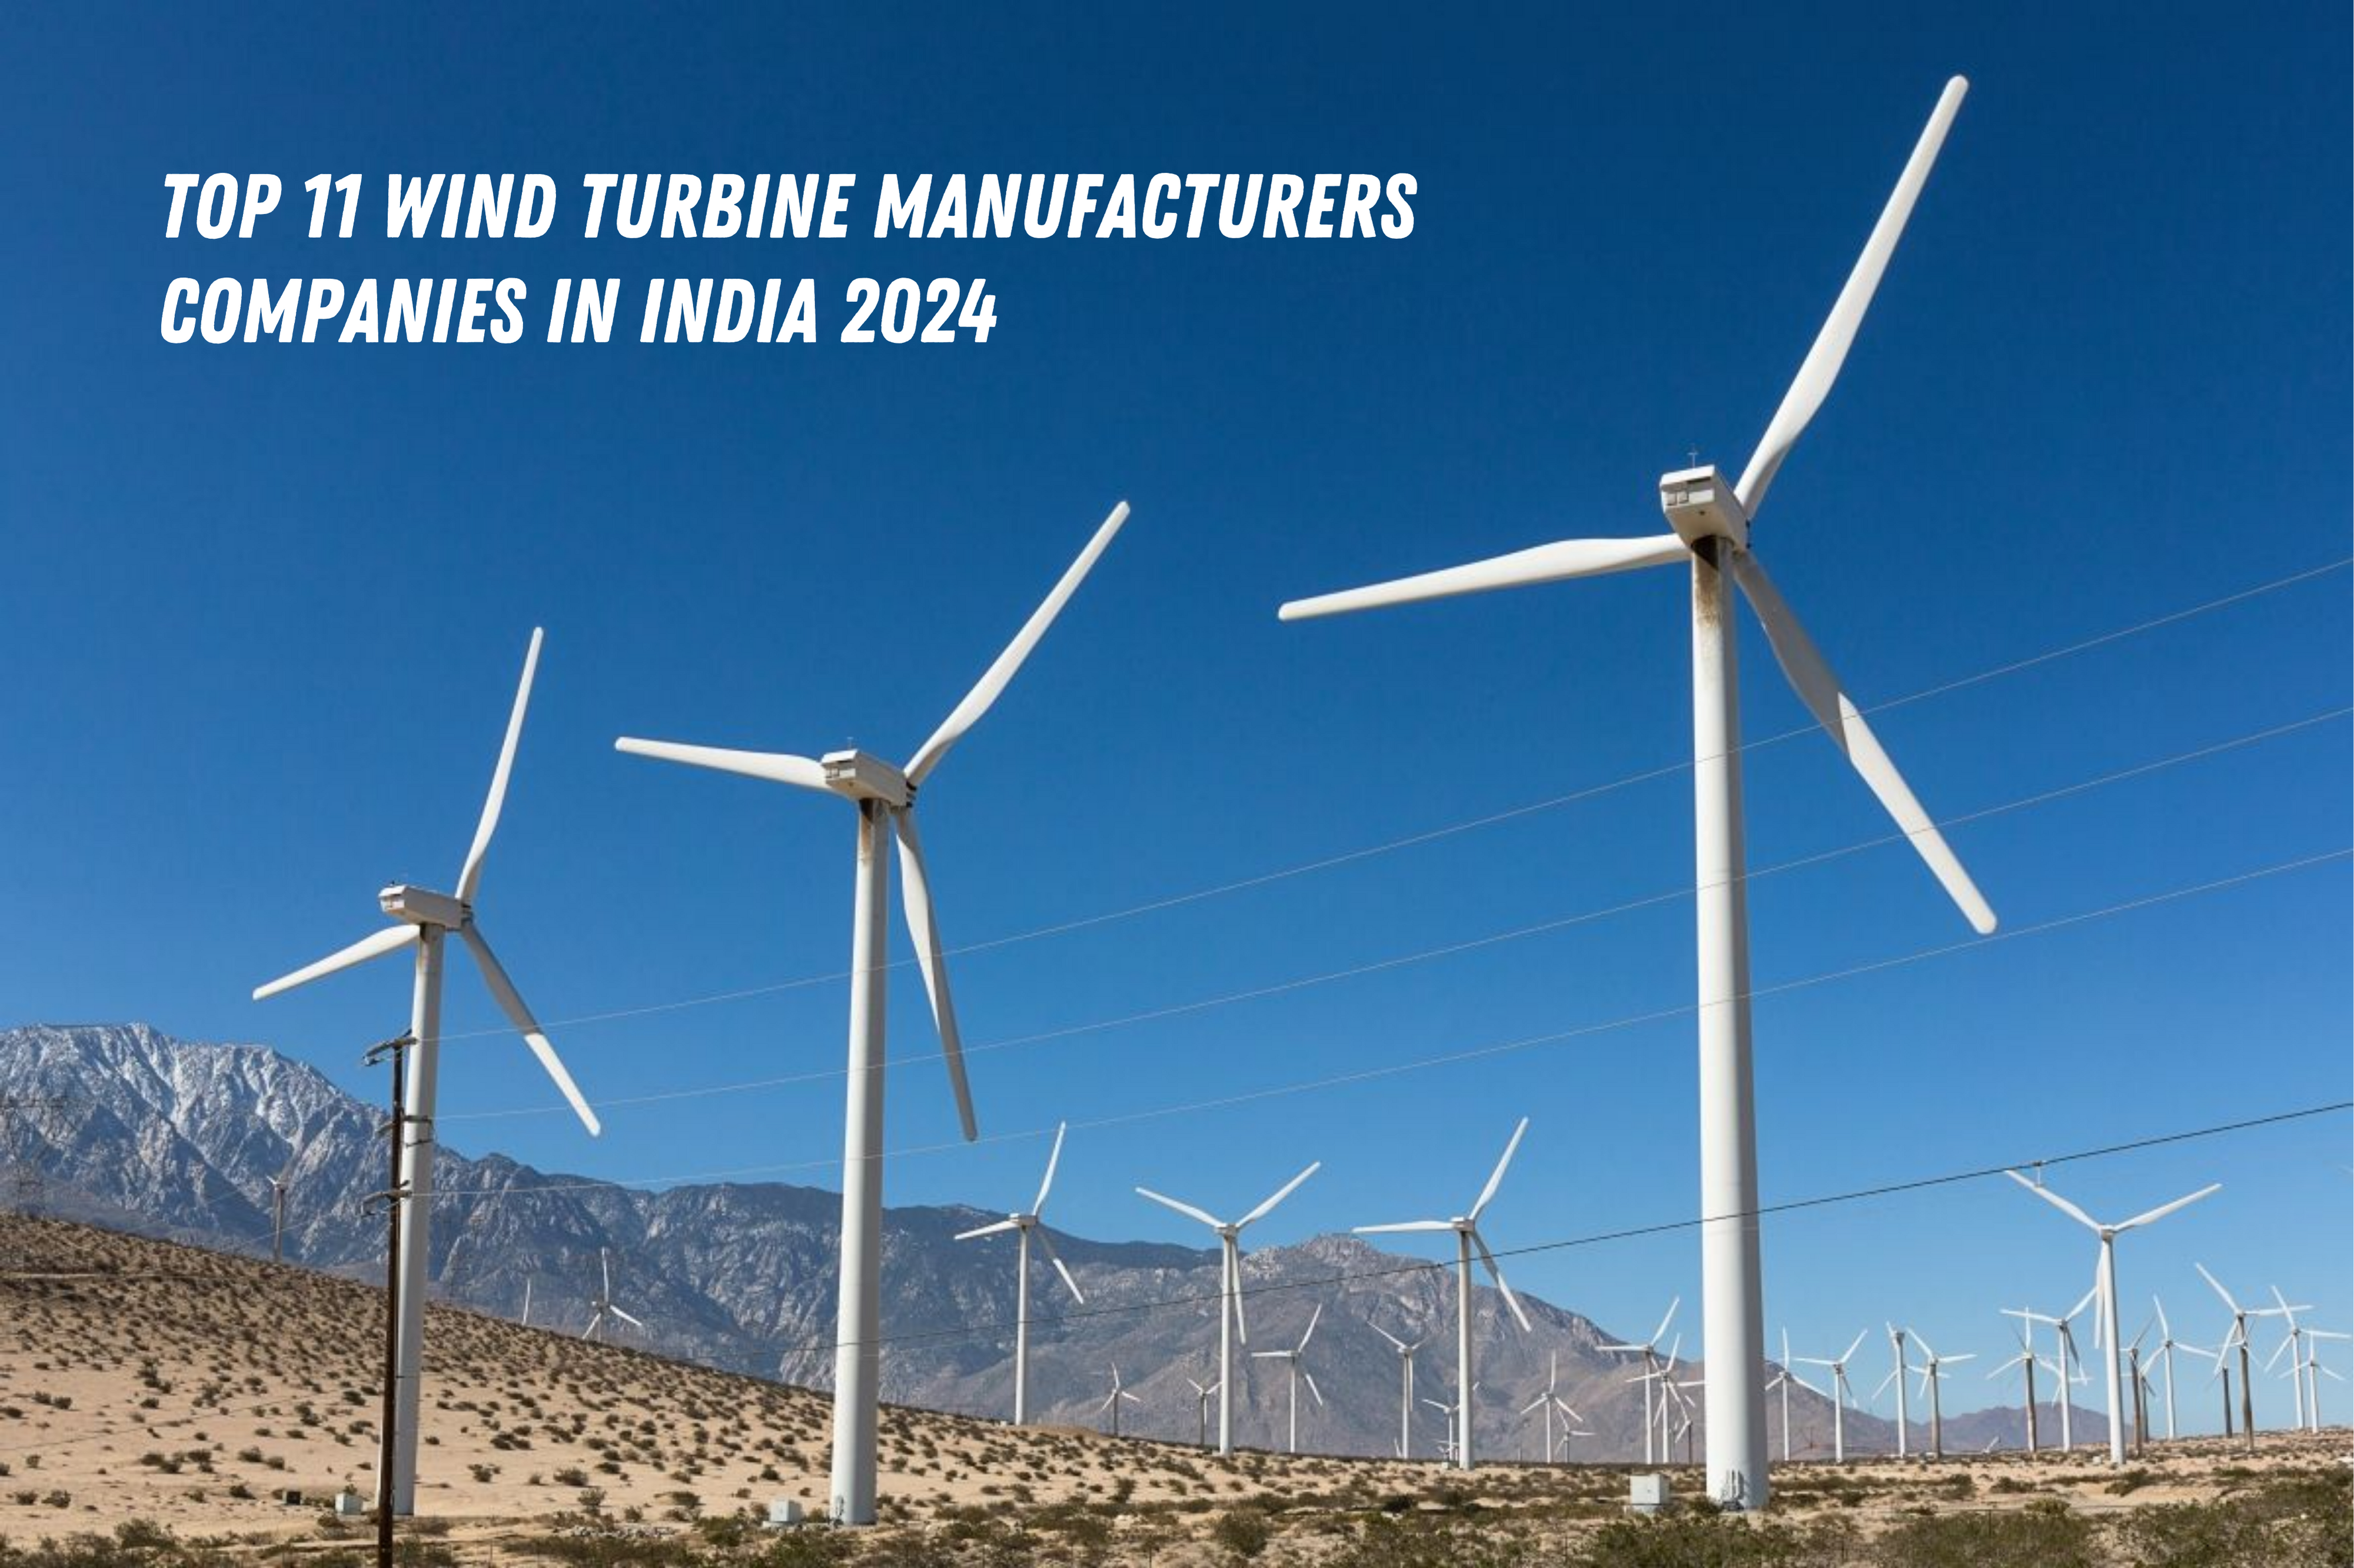 Top 11 Wind Turbine Manufacturers Companies in India 2024